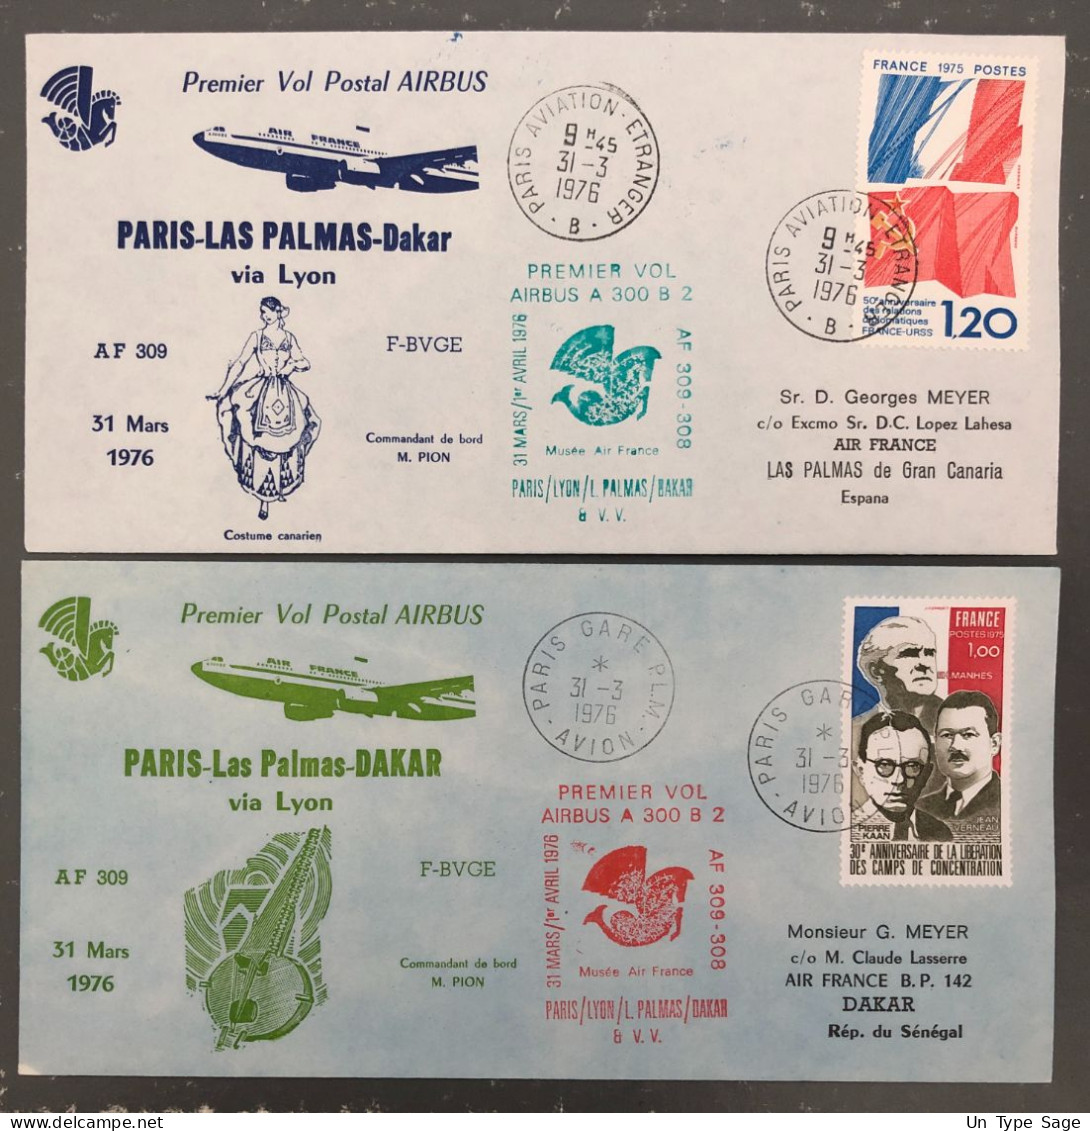 France, Premier Vol (Air France) Paris, Las Palmas, Dakar 31.3.1976 - 2 Enveloppes - (B1517) - Primi Voli